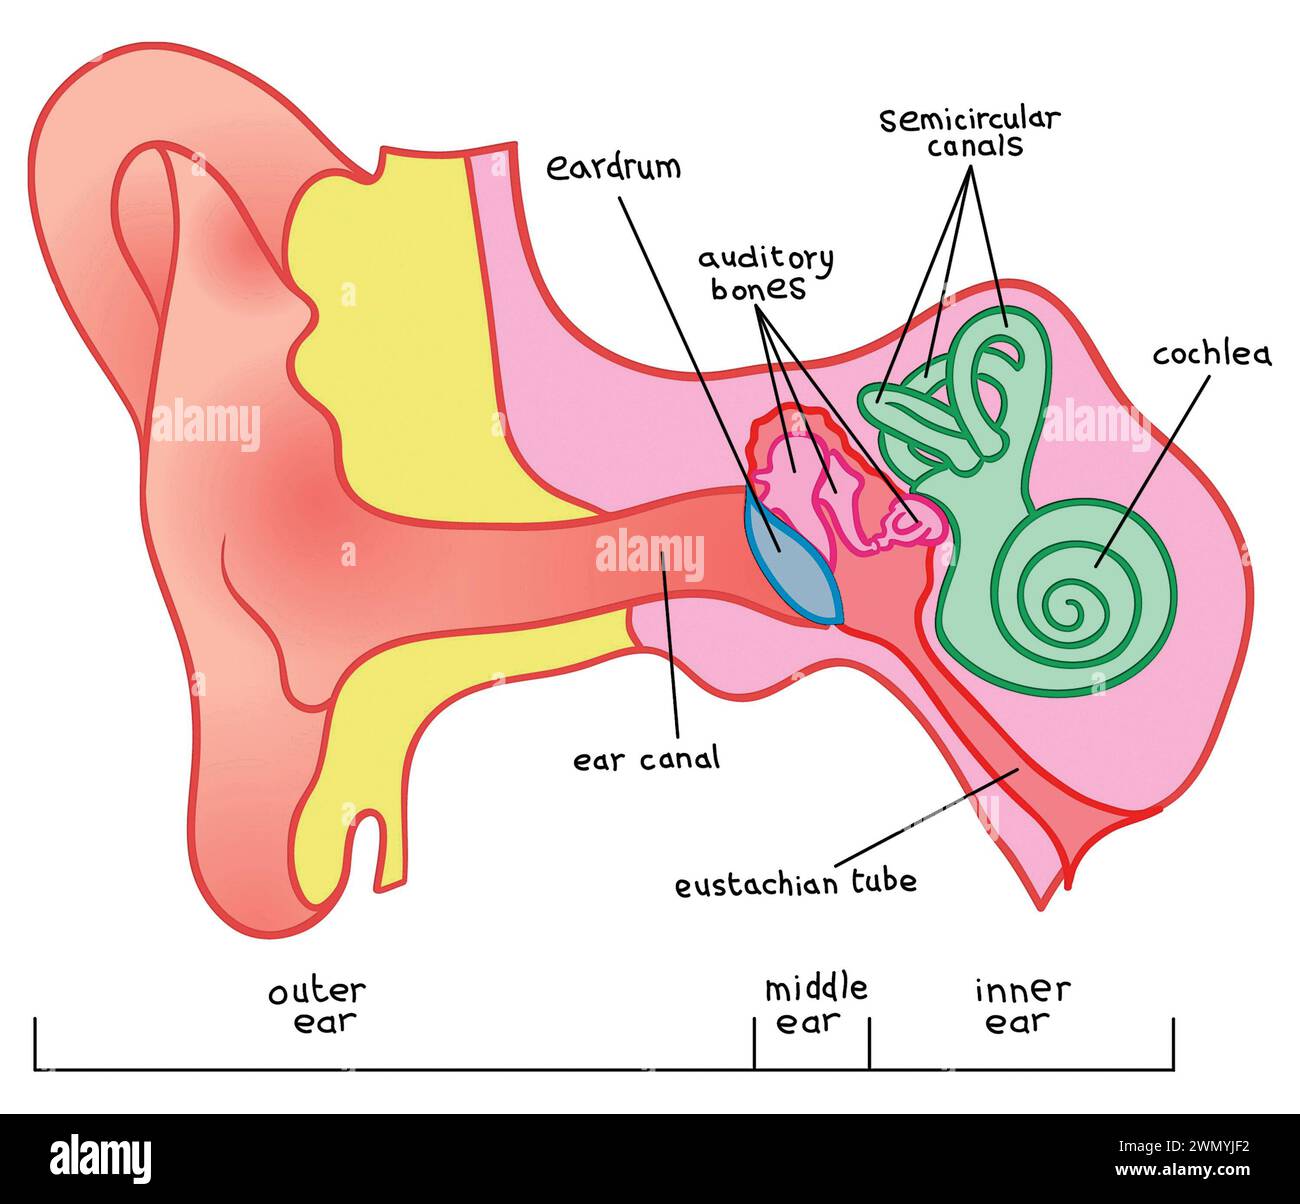 Medical art, outer ear, middle ear, inner ear, ear structure, hearing, body parts, senses, ear canal, auditory bones, eustachian tube, eardrum, canals Stock Photo